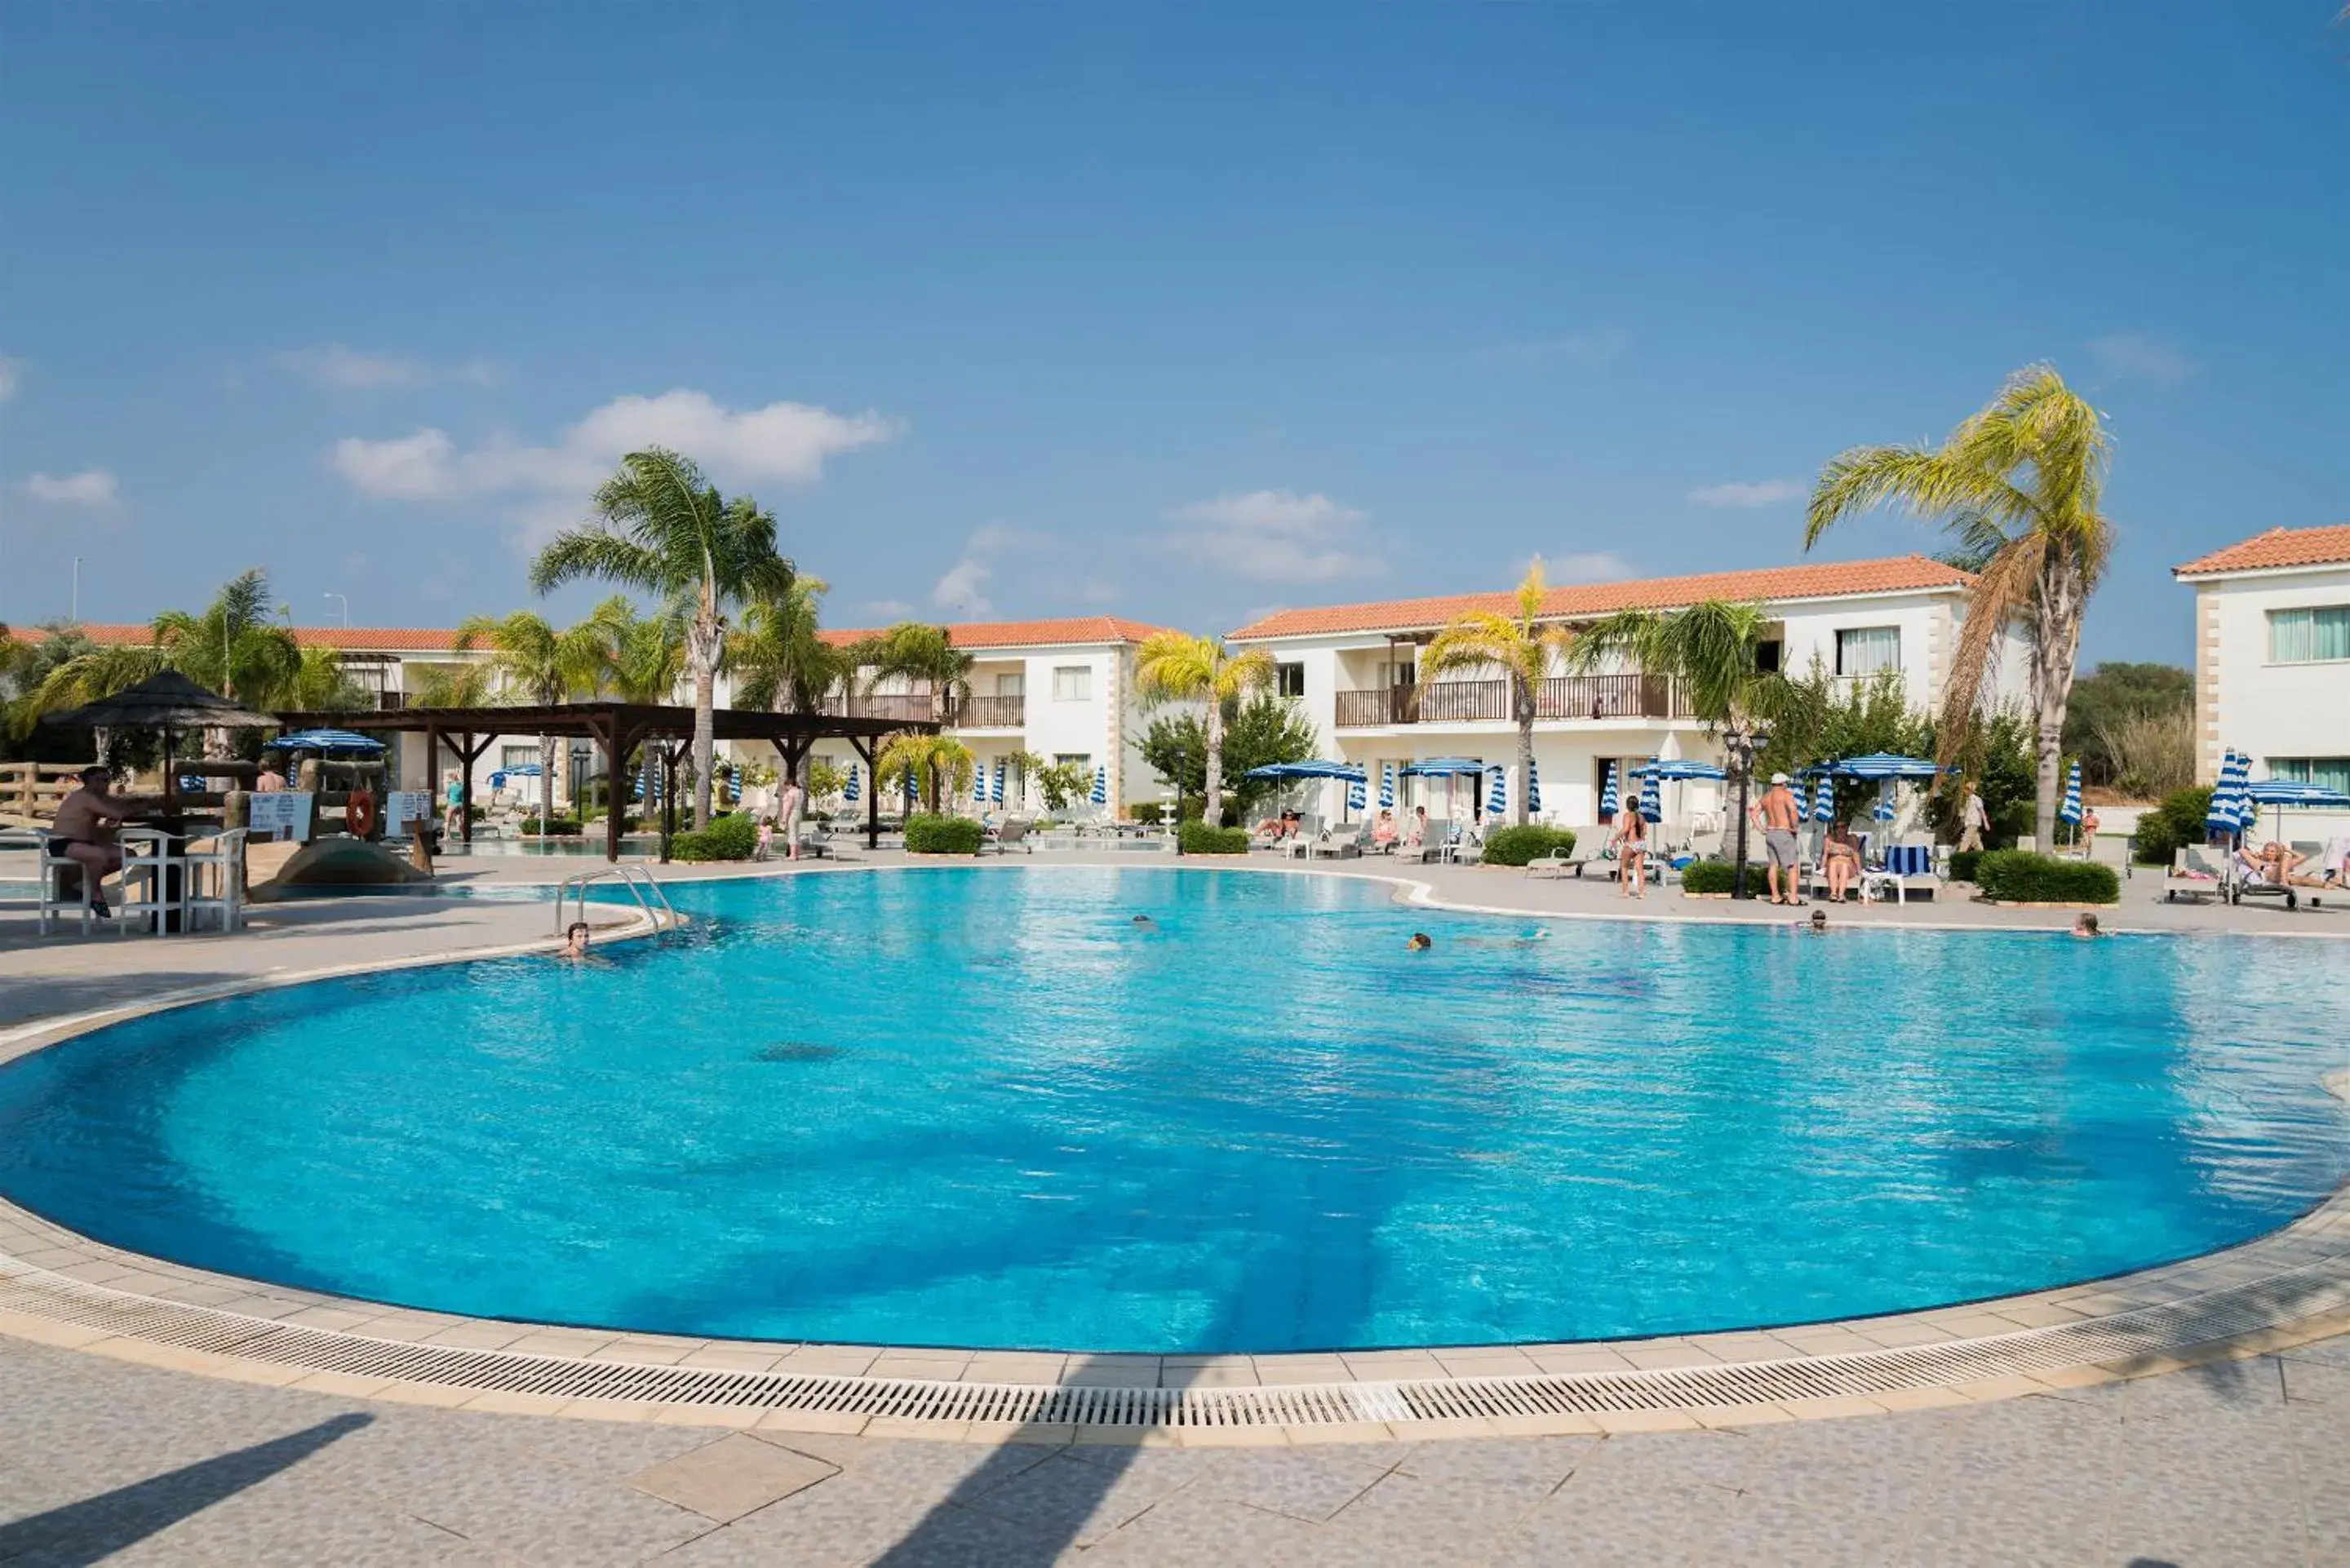 Swimming Pool in Tsokkos Paradise Holiday Village